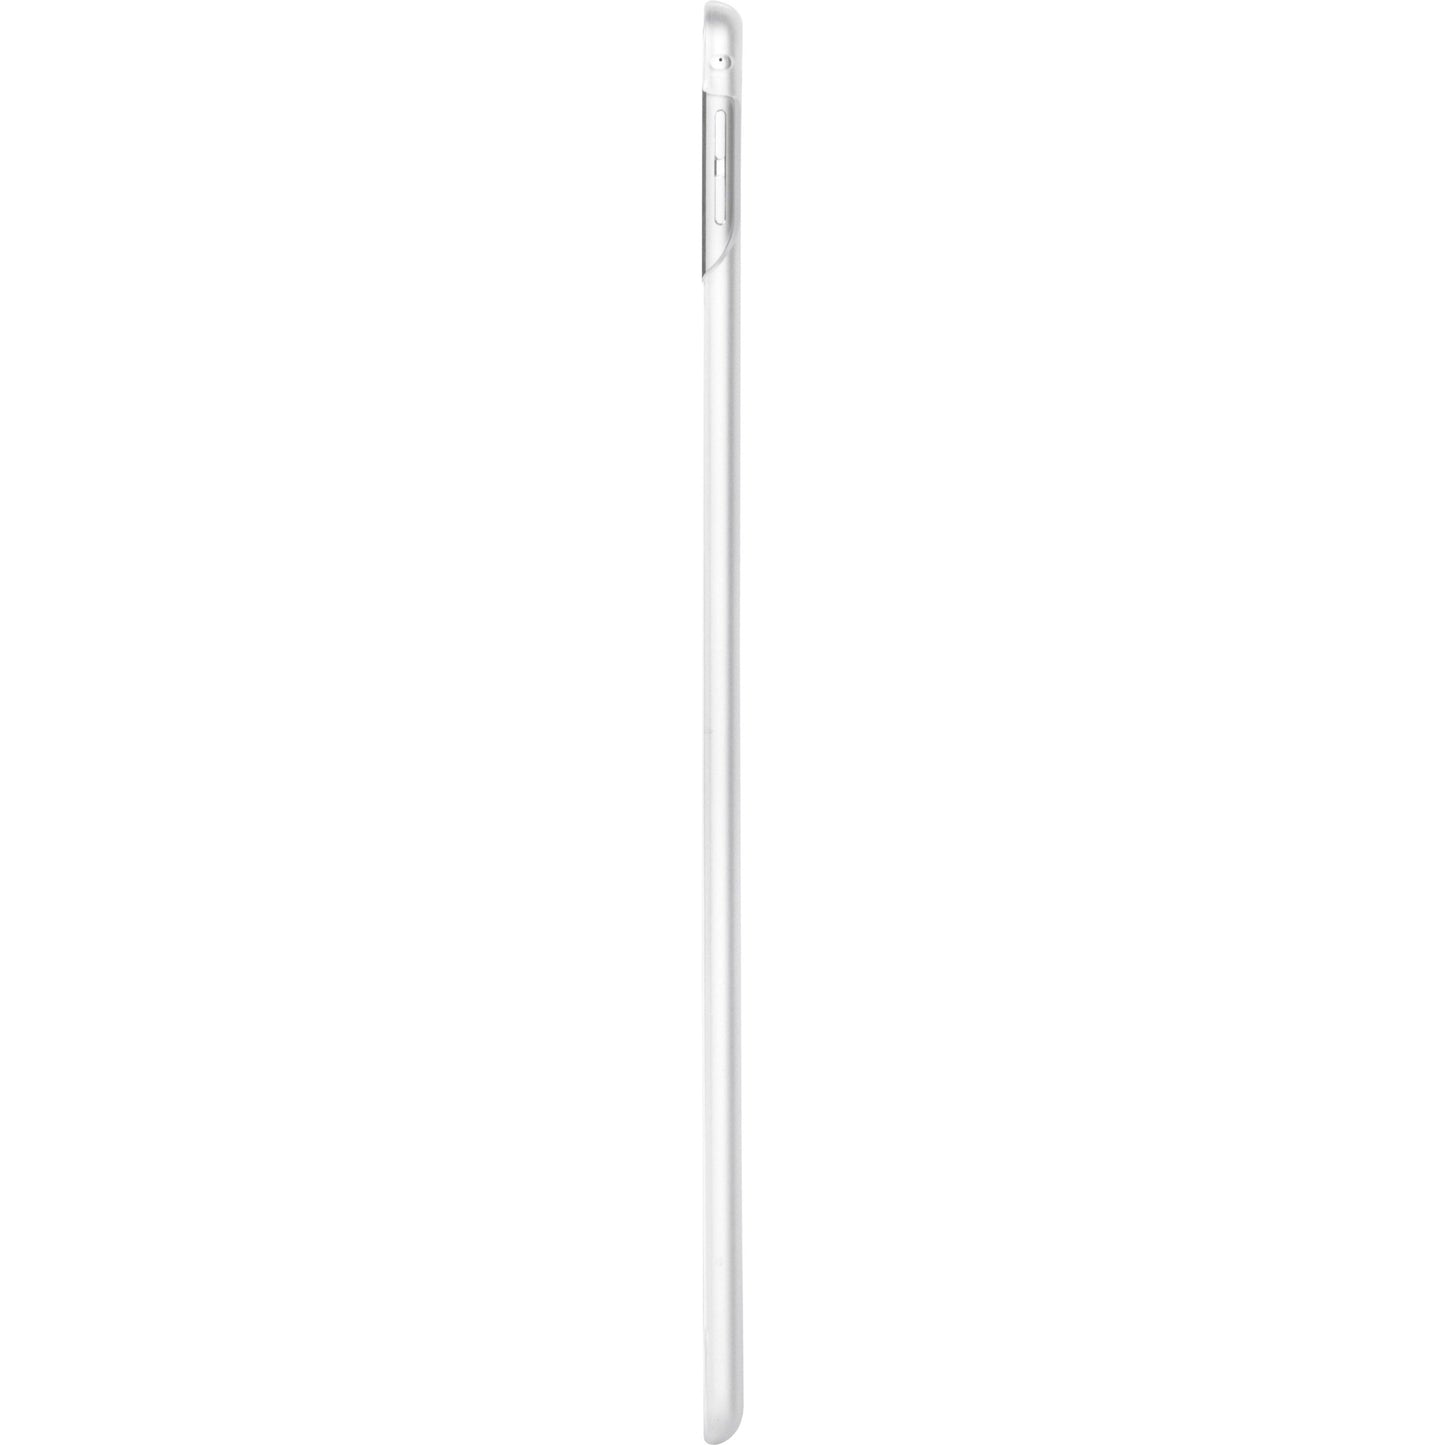 Moshi iGlaze Case Apple iPad Pro Tablet - Clear